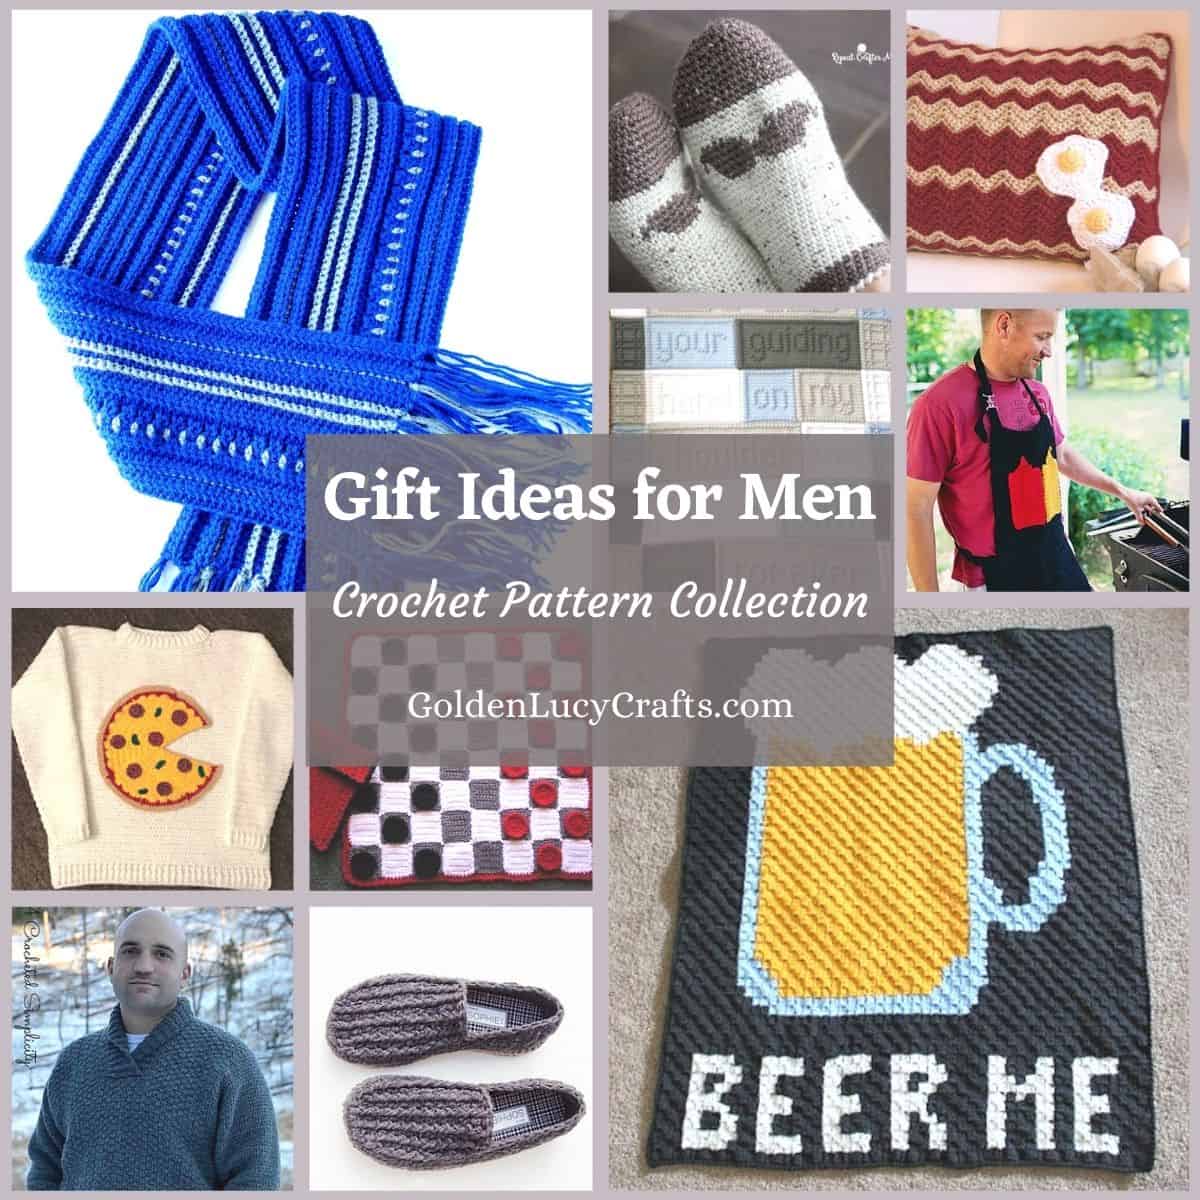 Photo collage of crochet gift ideas for men.